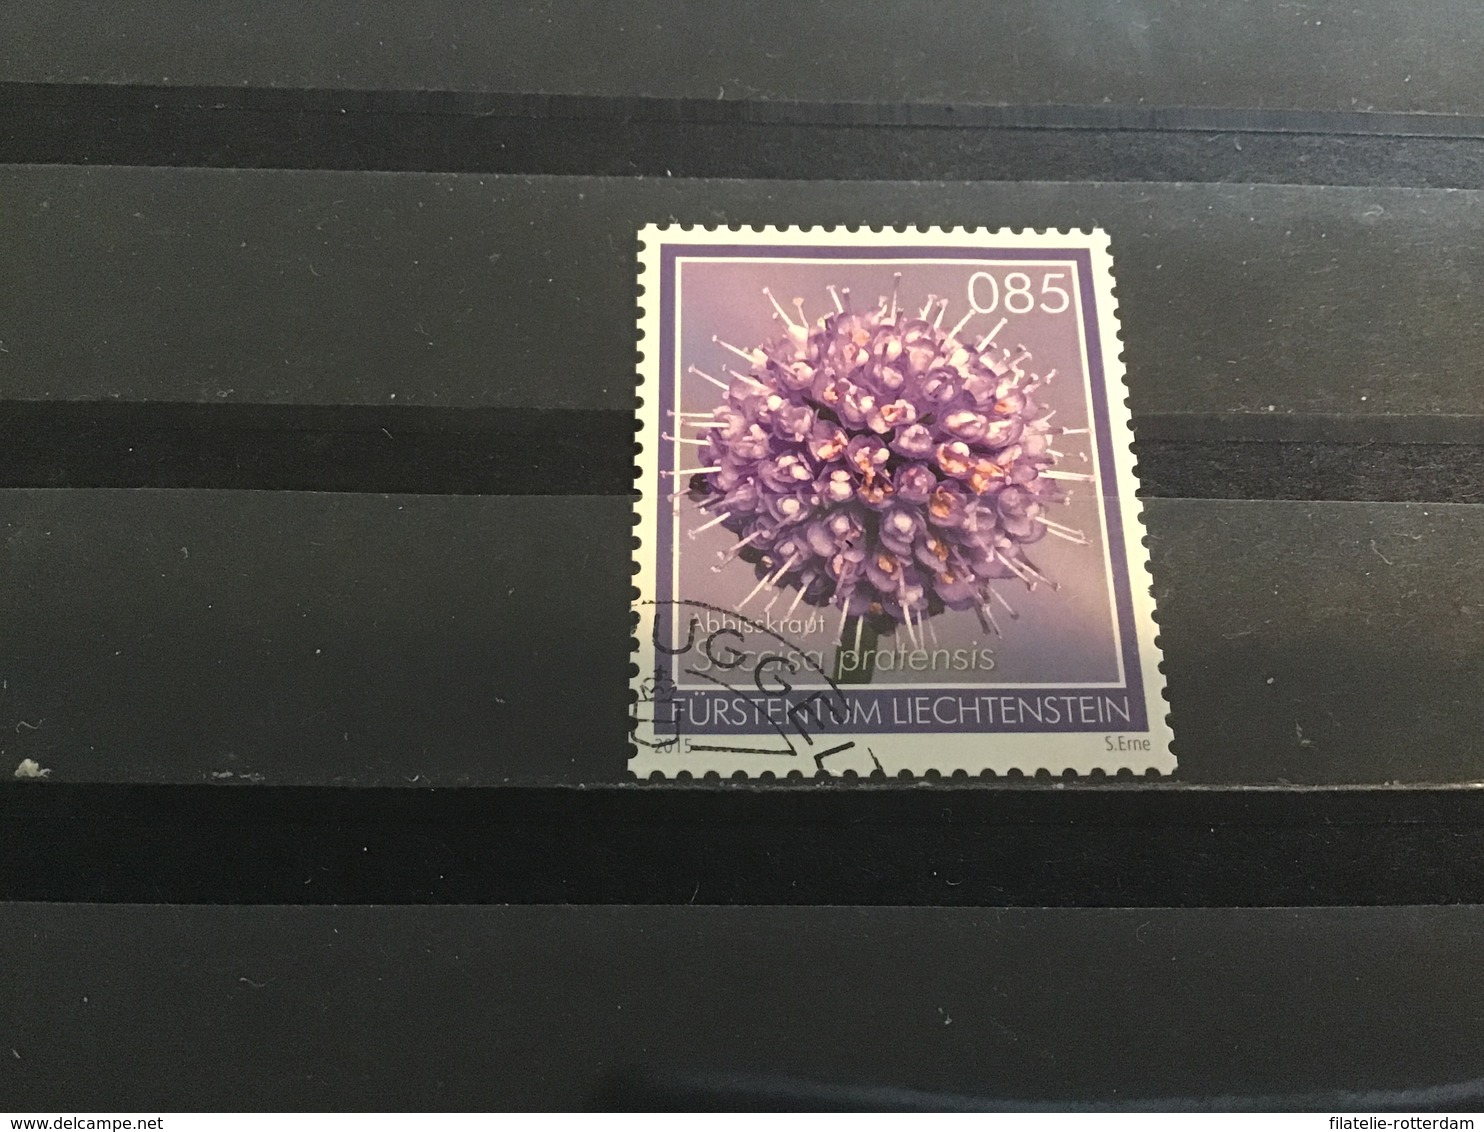 Liechtenstein - Weidebloemen (85) 2015 - Used Stamps